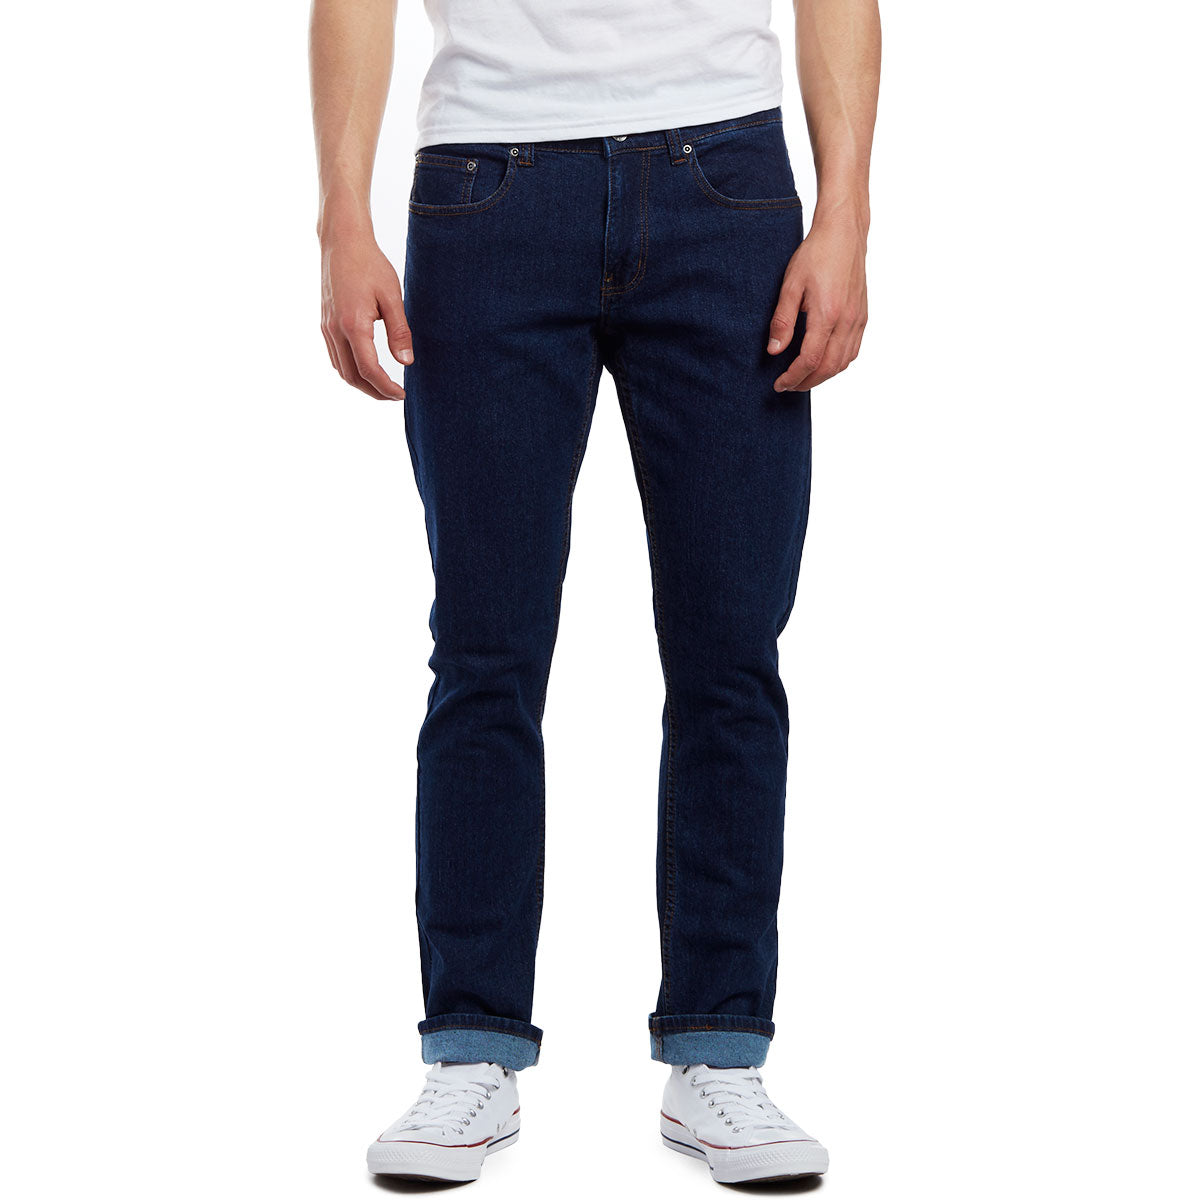 CCS Slim Fit Jeans - Dark Rinse image 3